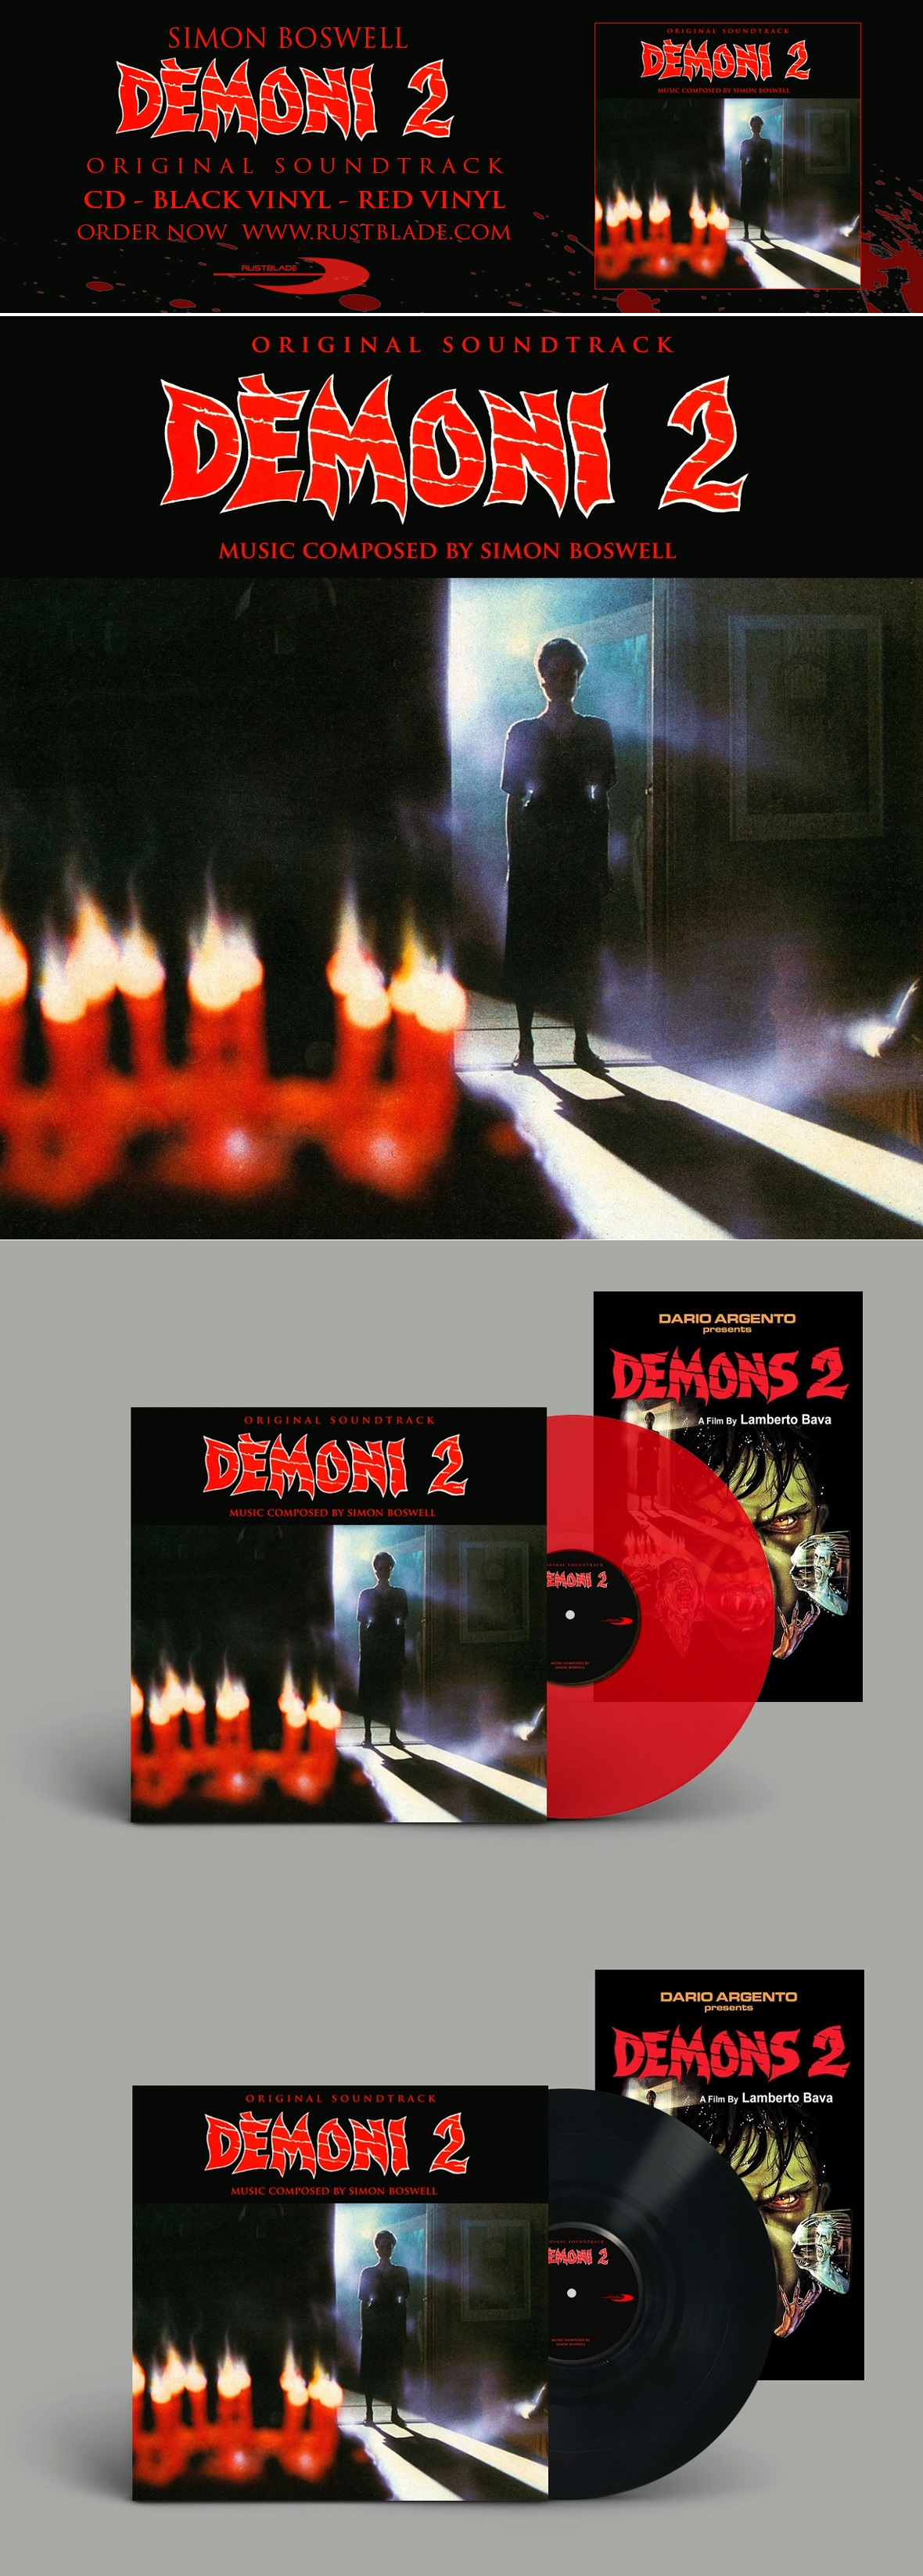 Dmoni 2... L'incubo ritorna (Demons 2: The Nightmare Returns)